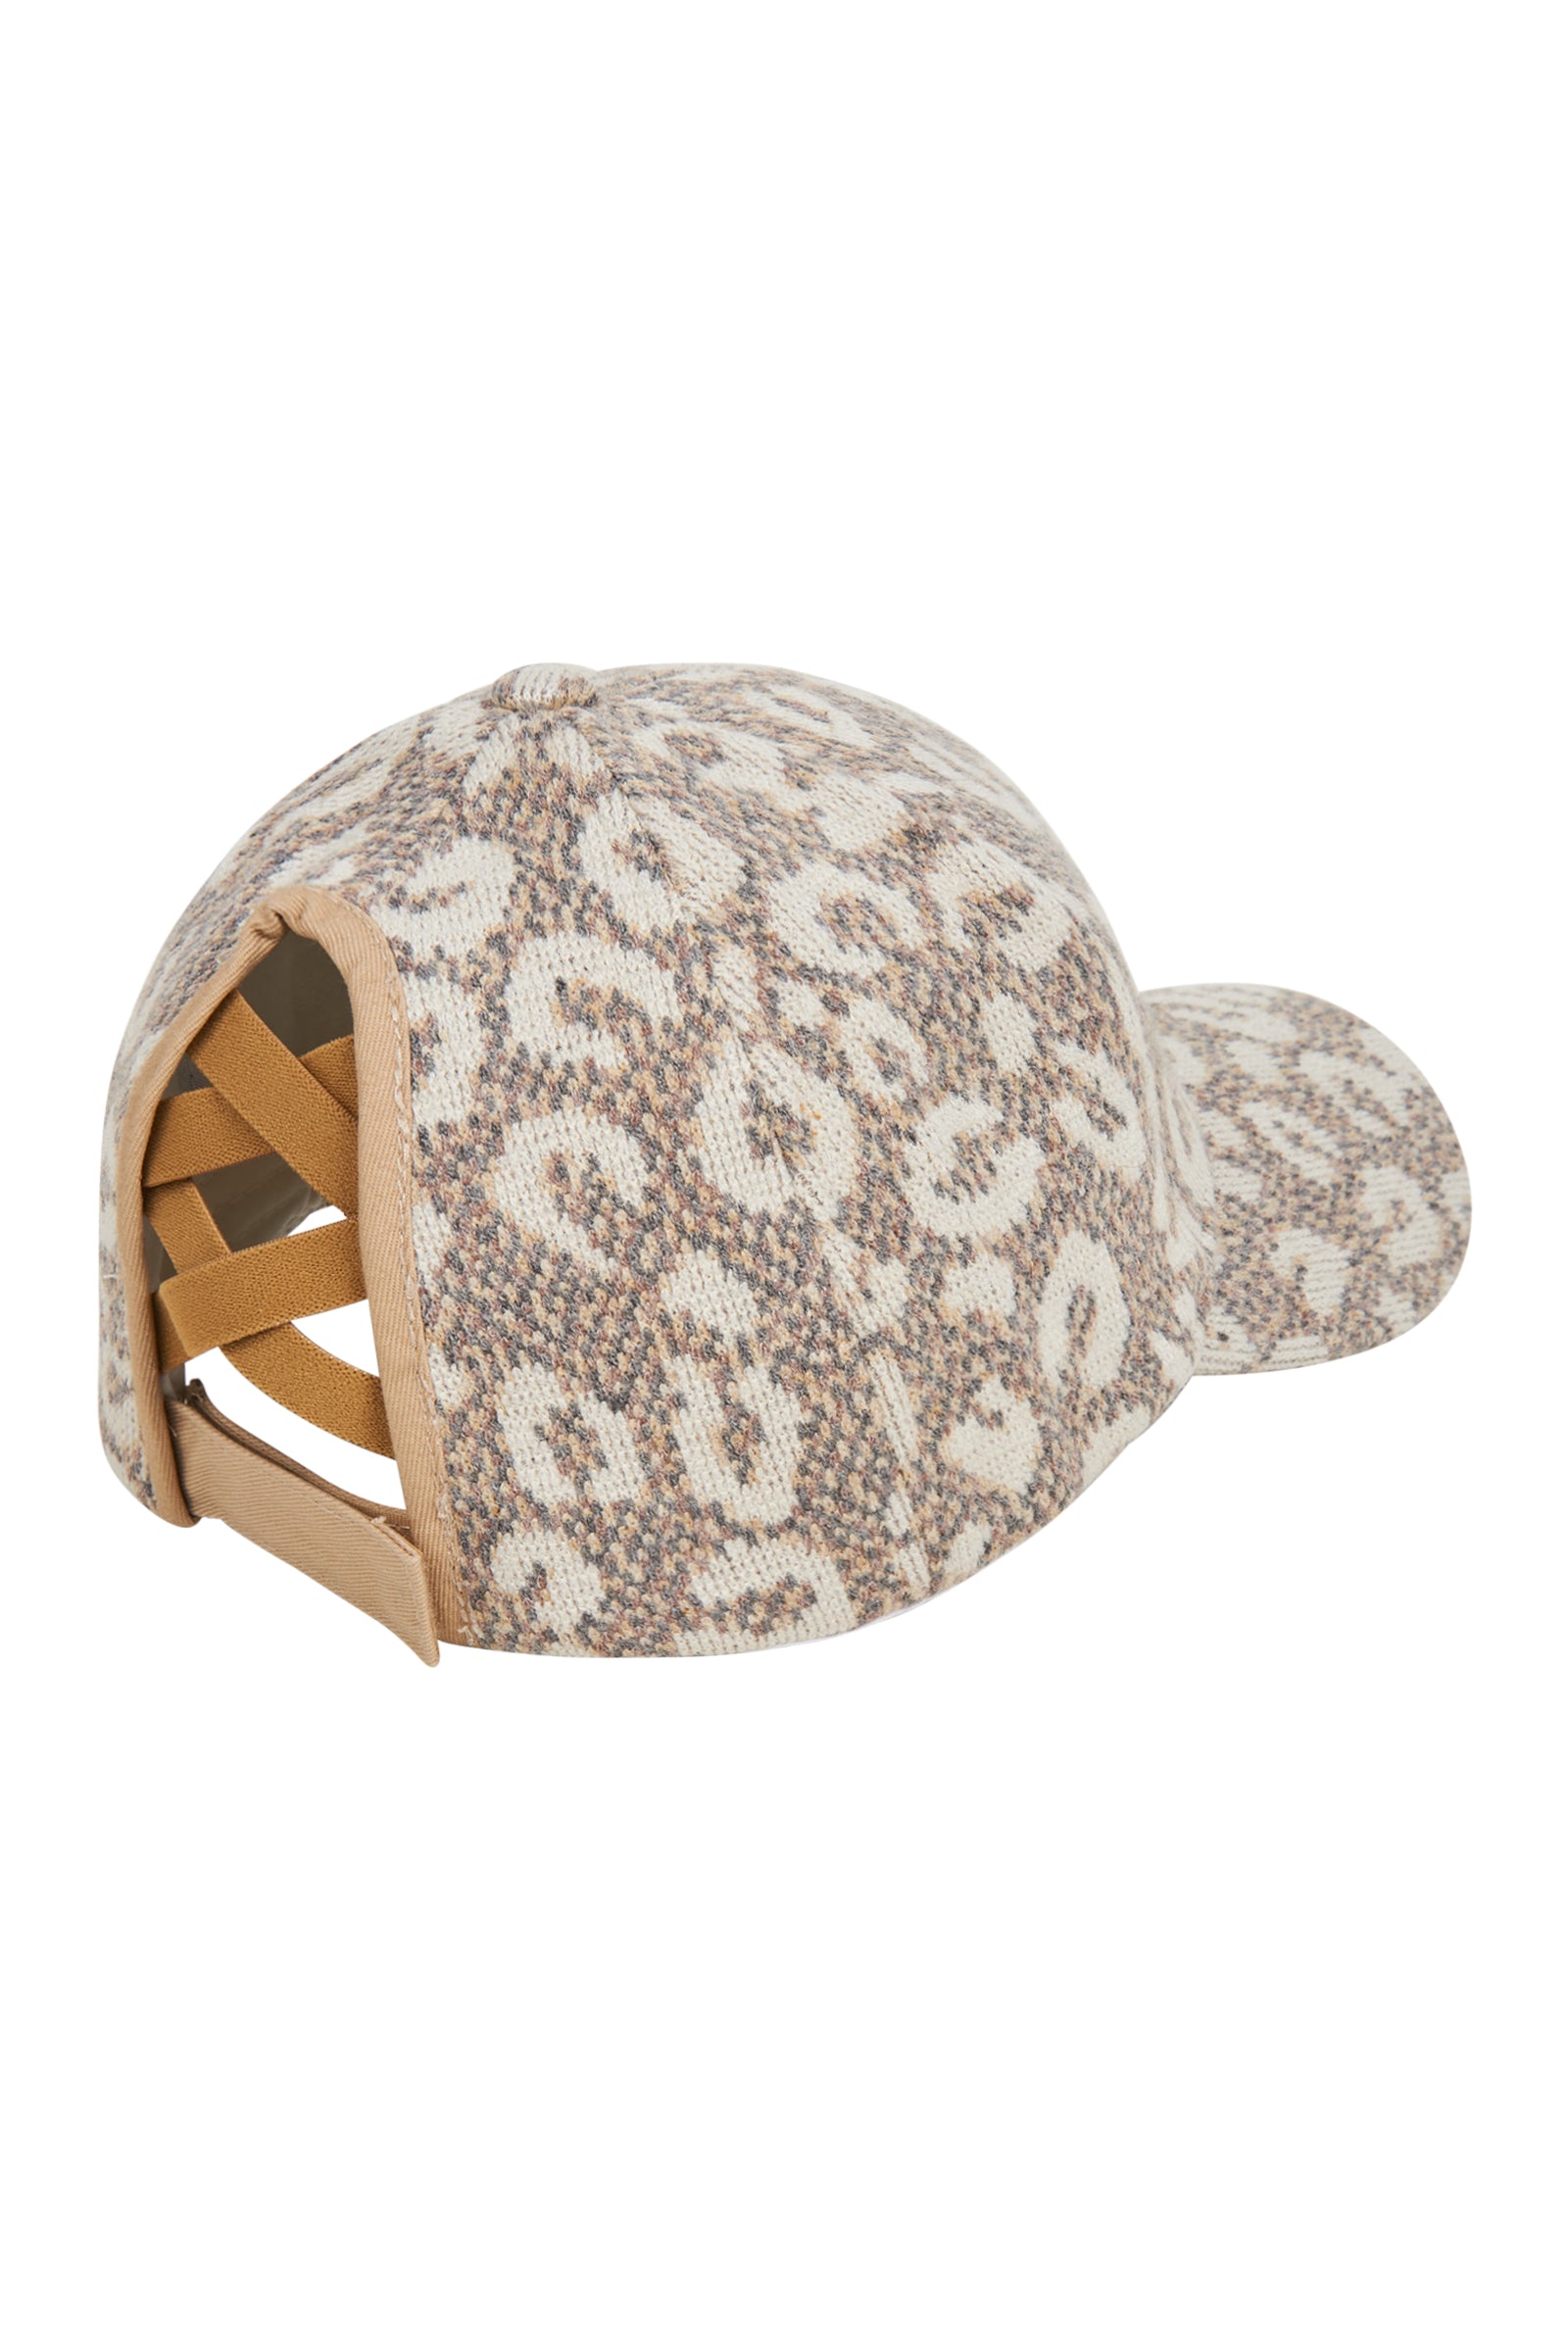 Pilbara Cap - Vanilla - eb&ive Hat